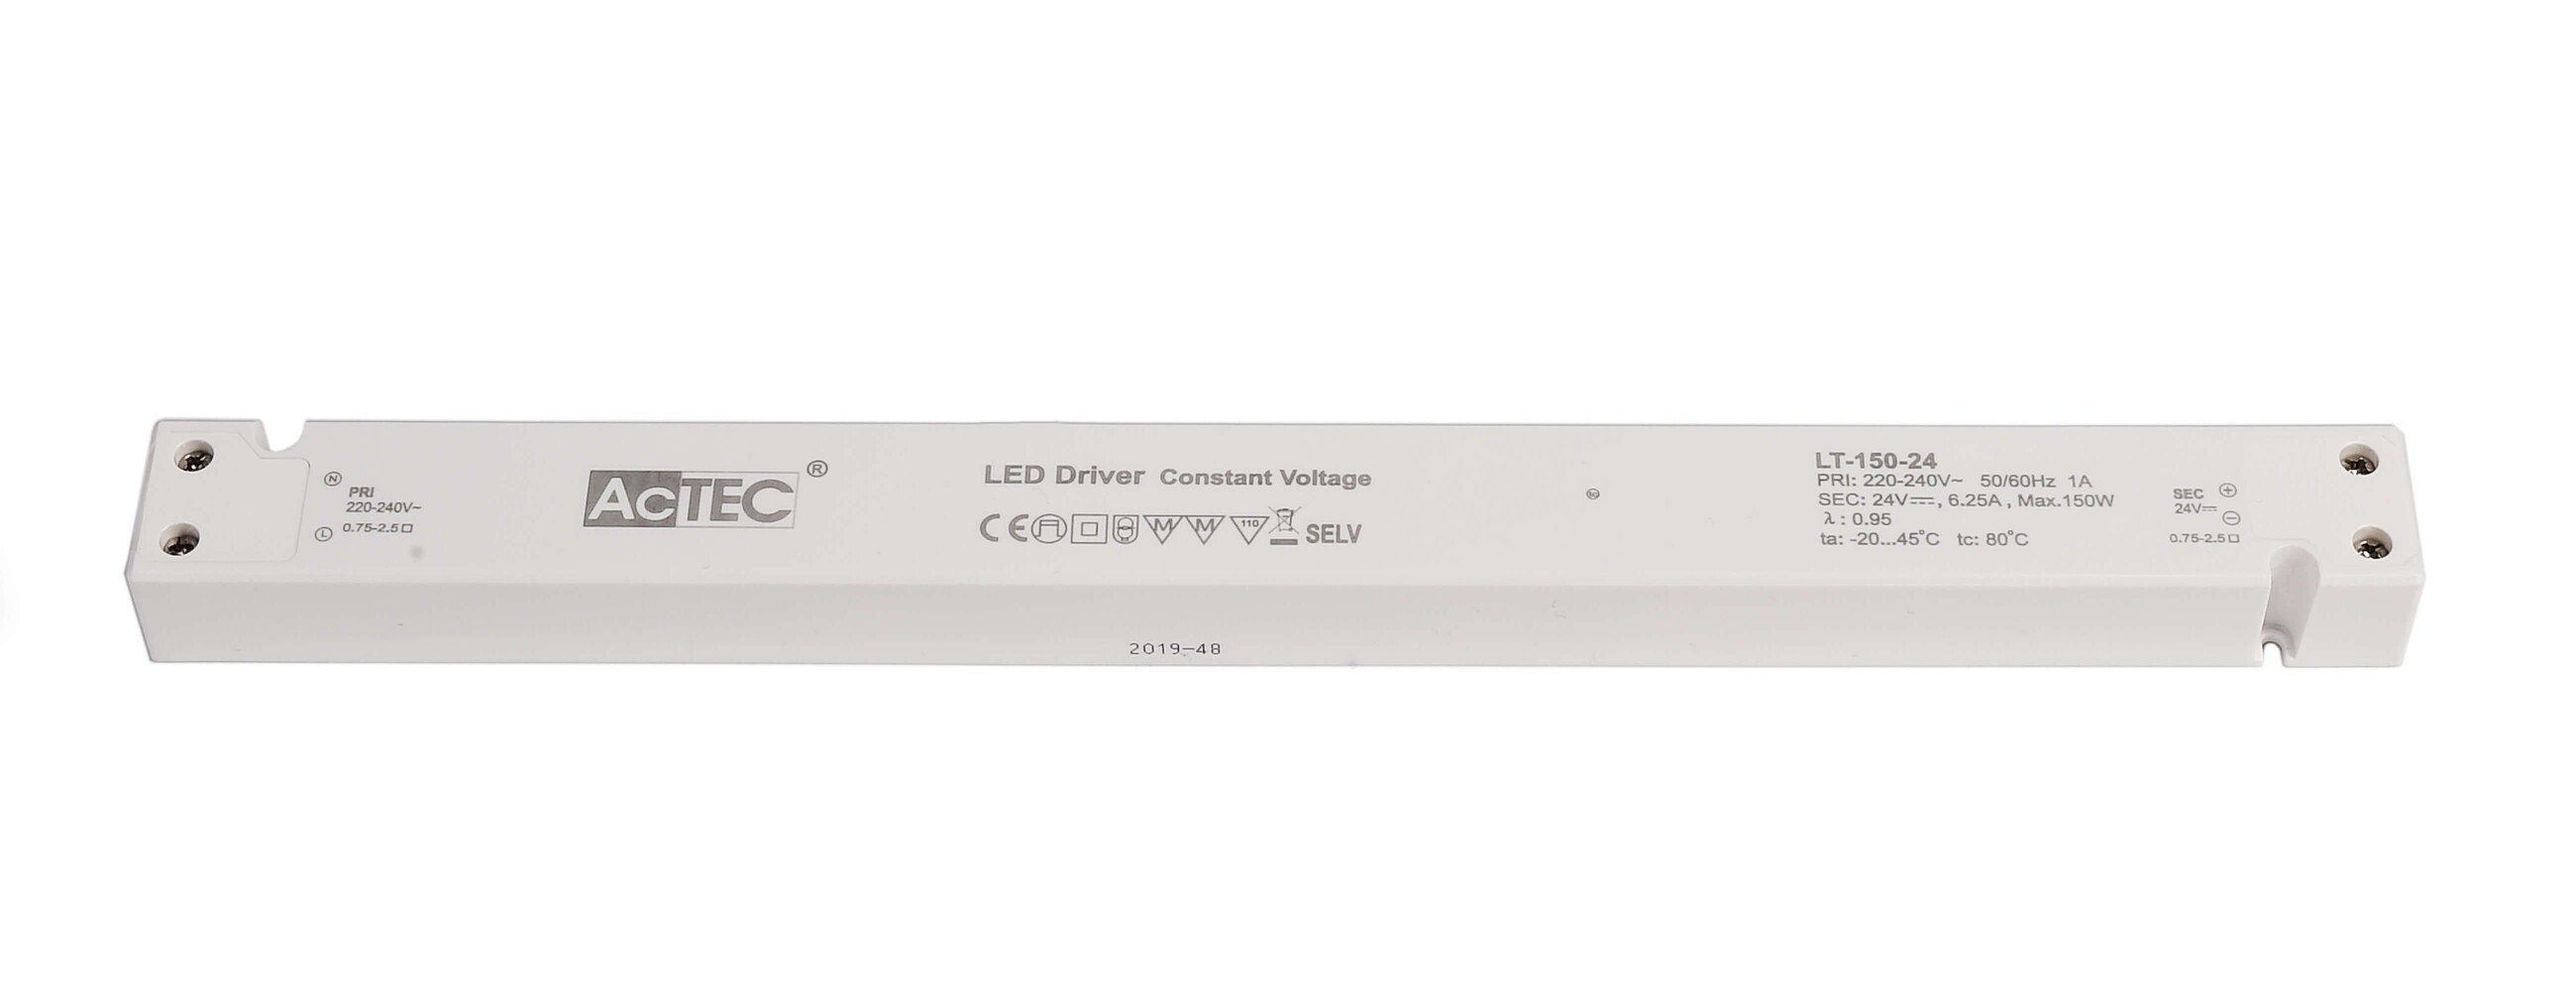 Stromsparendes LED-Netzteil der Marke Deko-Light